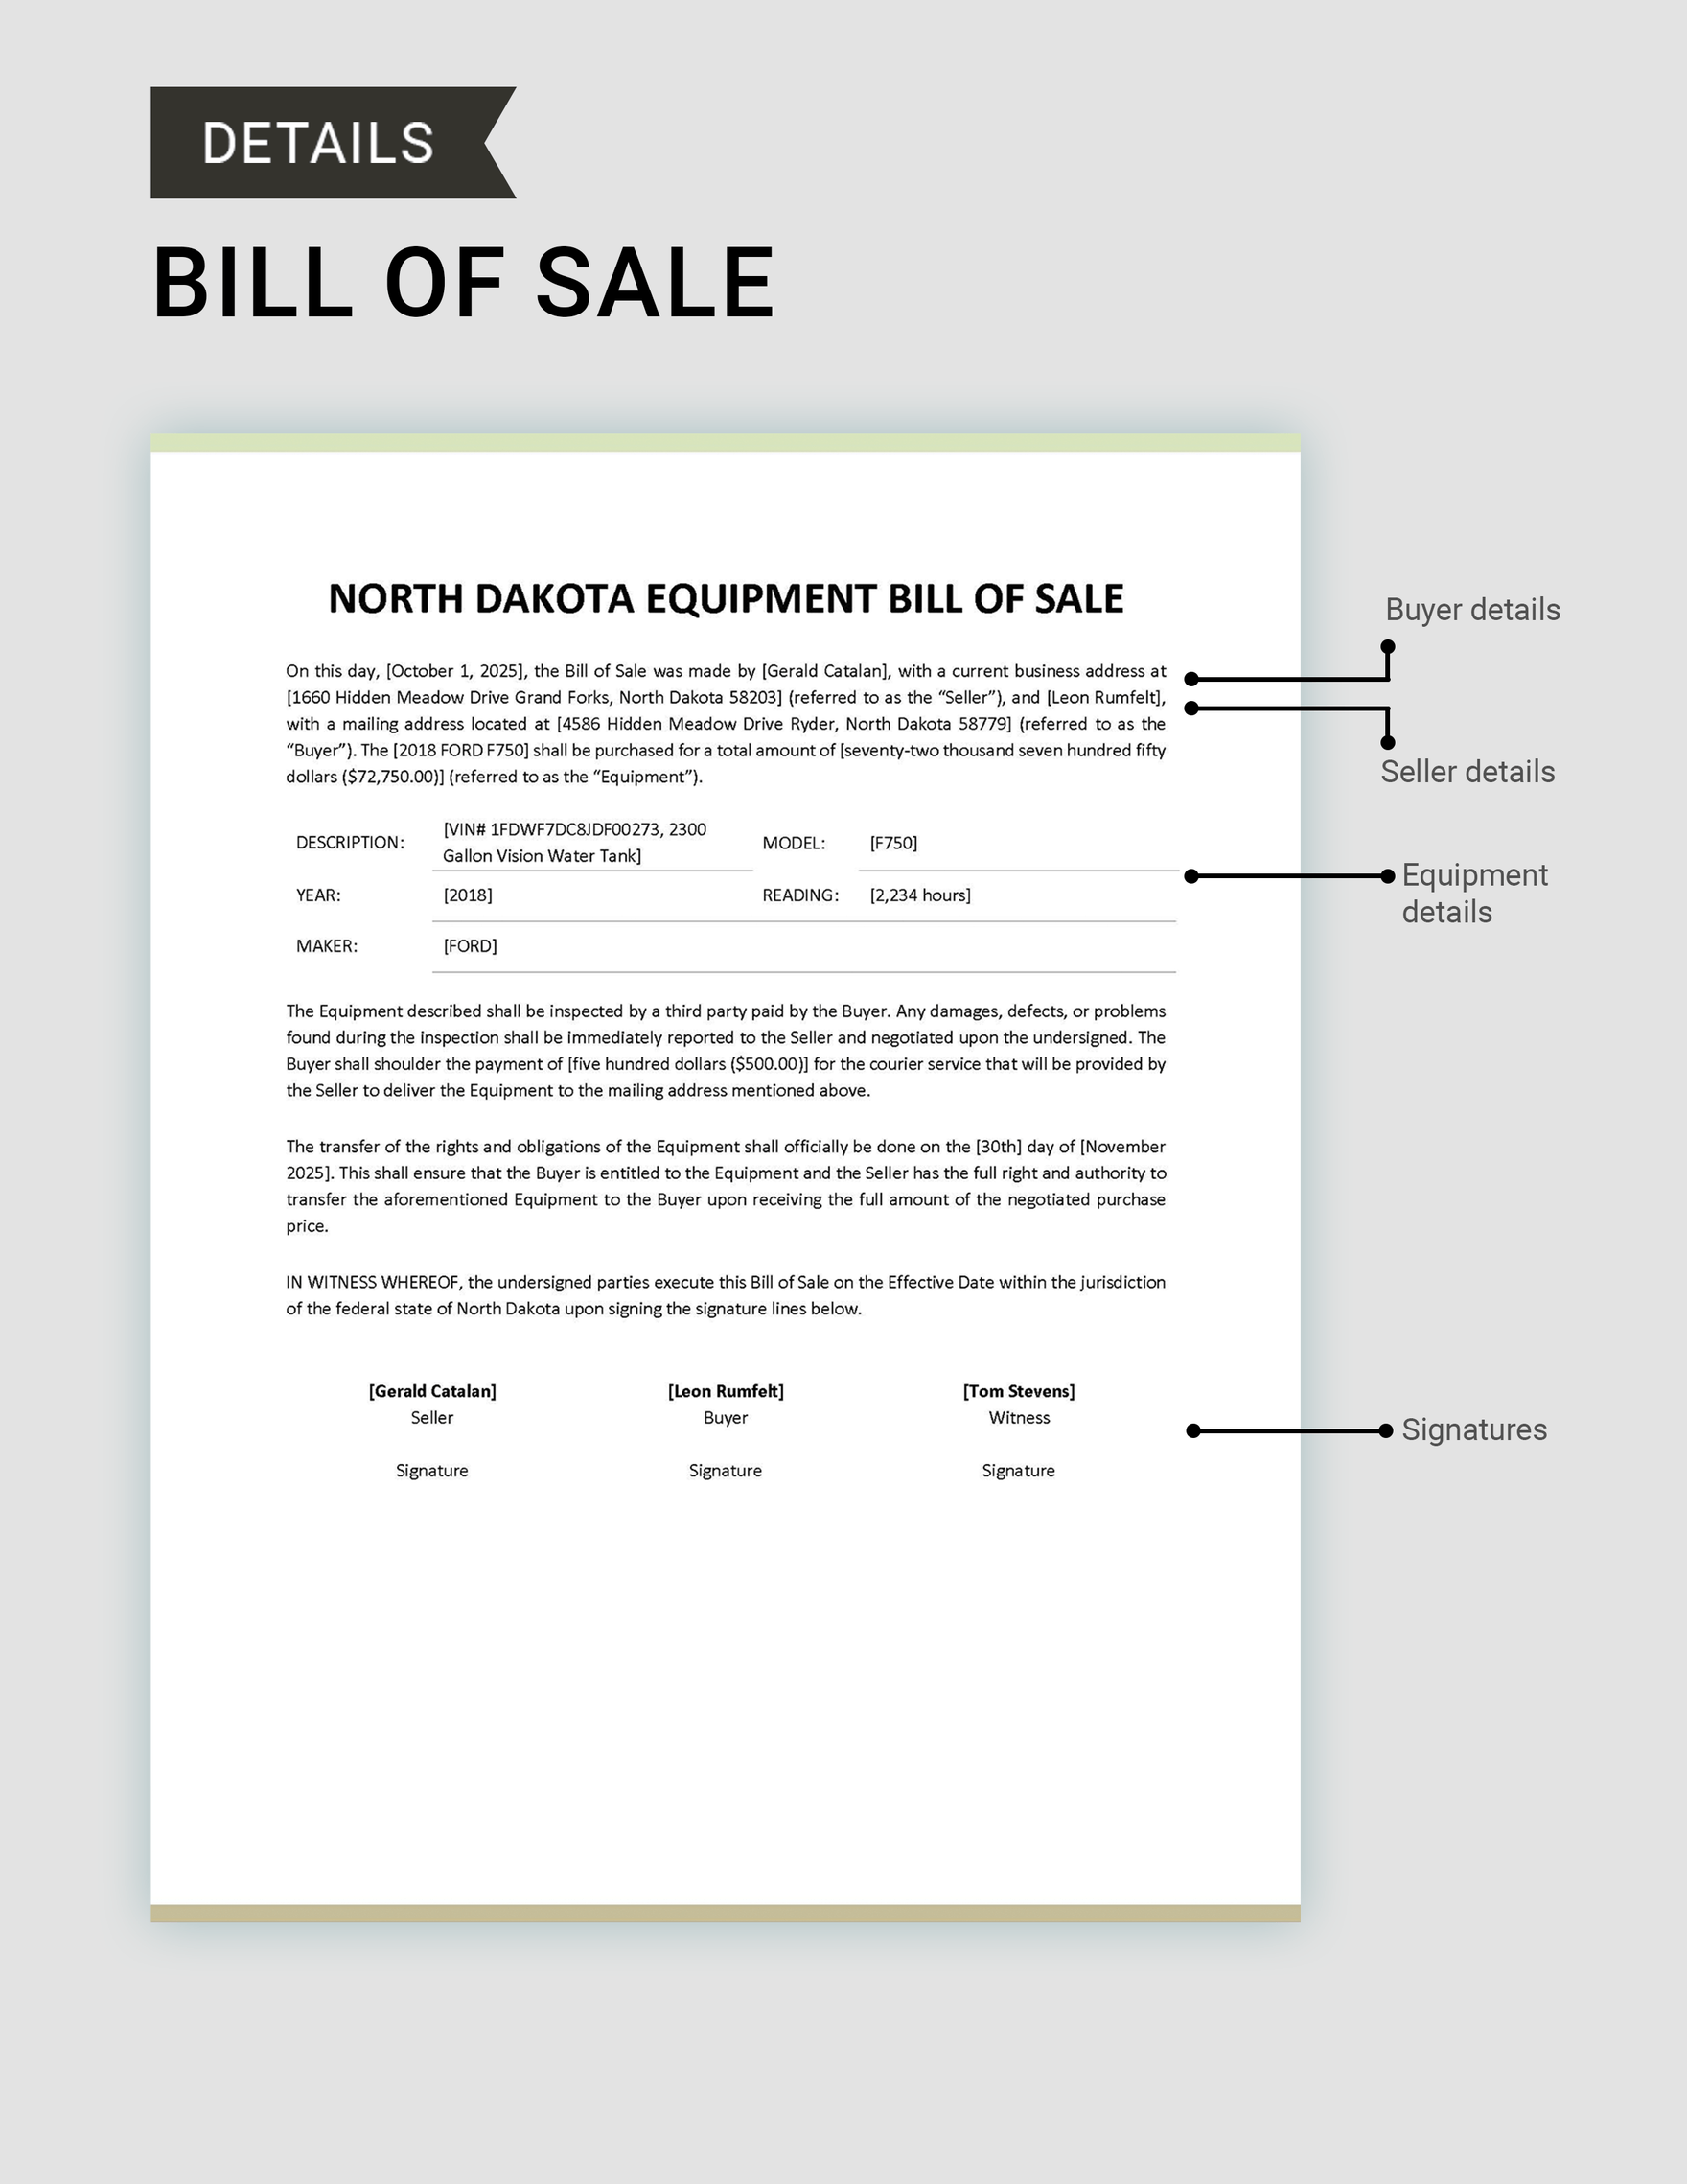 North Dakota Equipment Bill of Sale Template